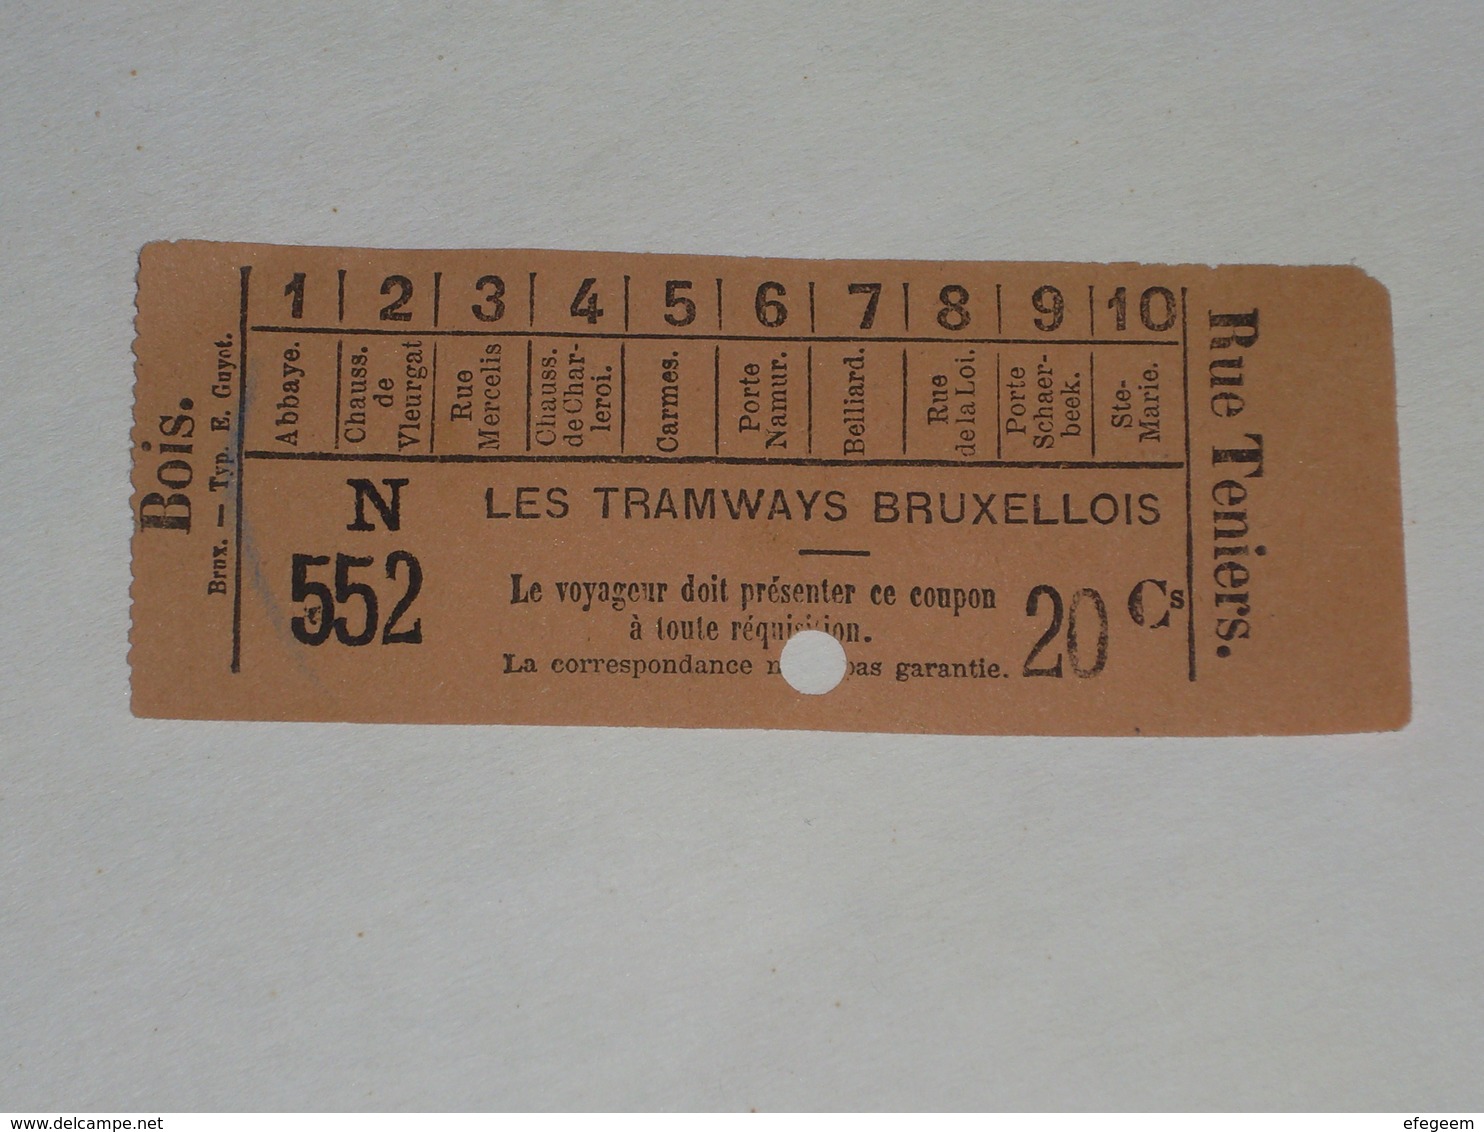 Ancien Ticket Tramway, Bruxelles Belgique.Ticket Autobus,Train, Metro. - Europe